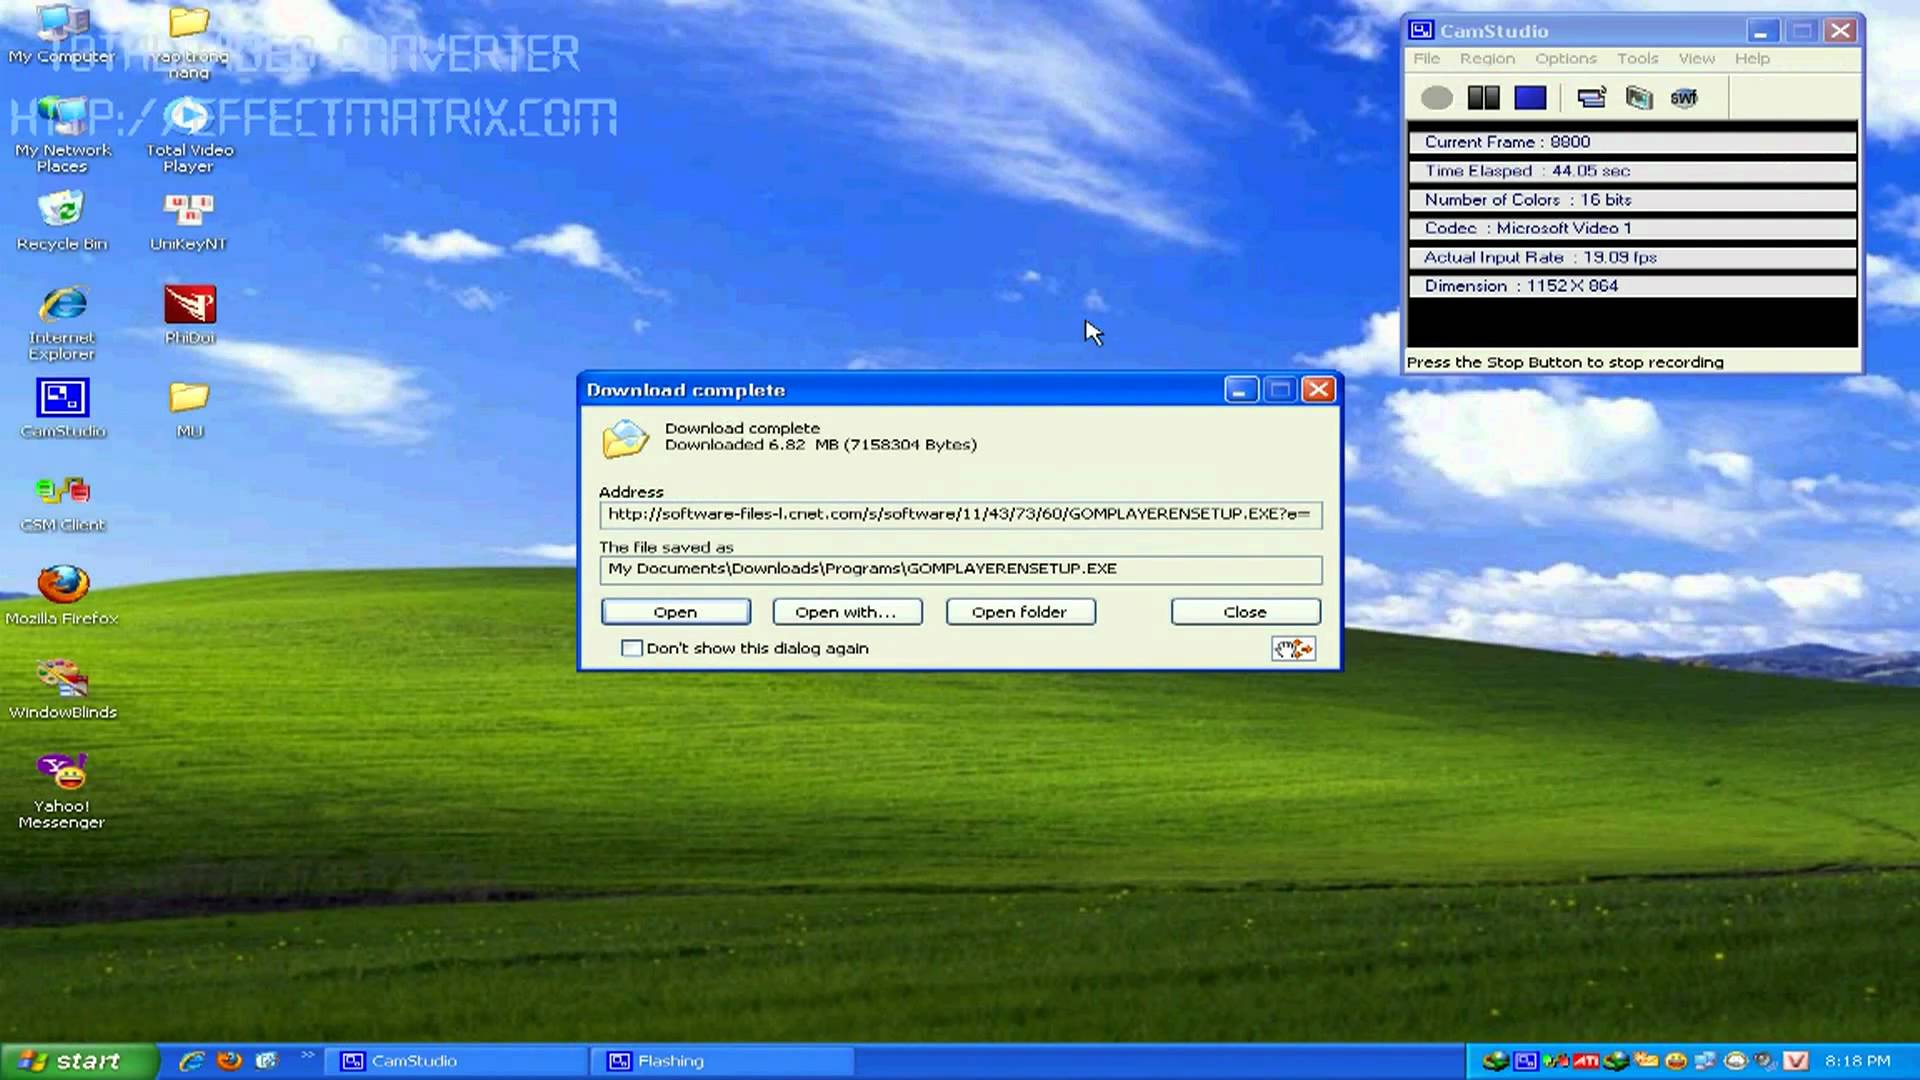 windows xp desktop 1920x1080